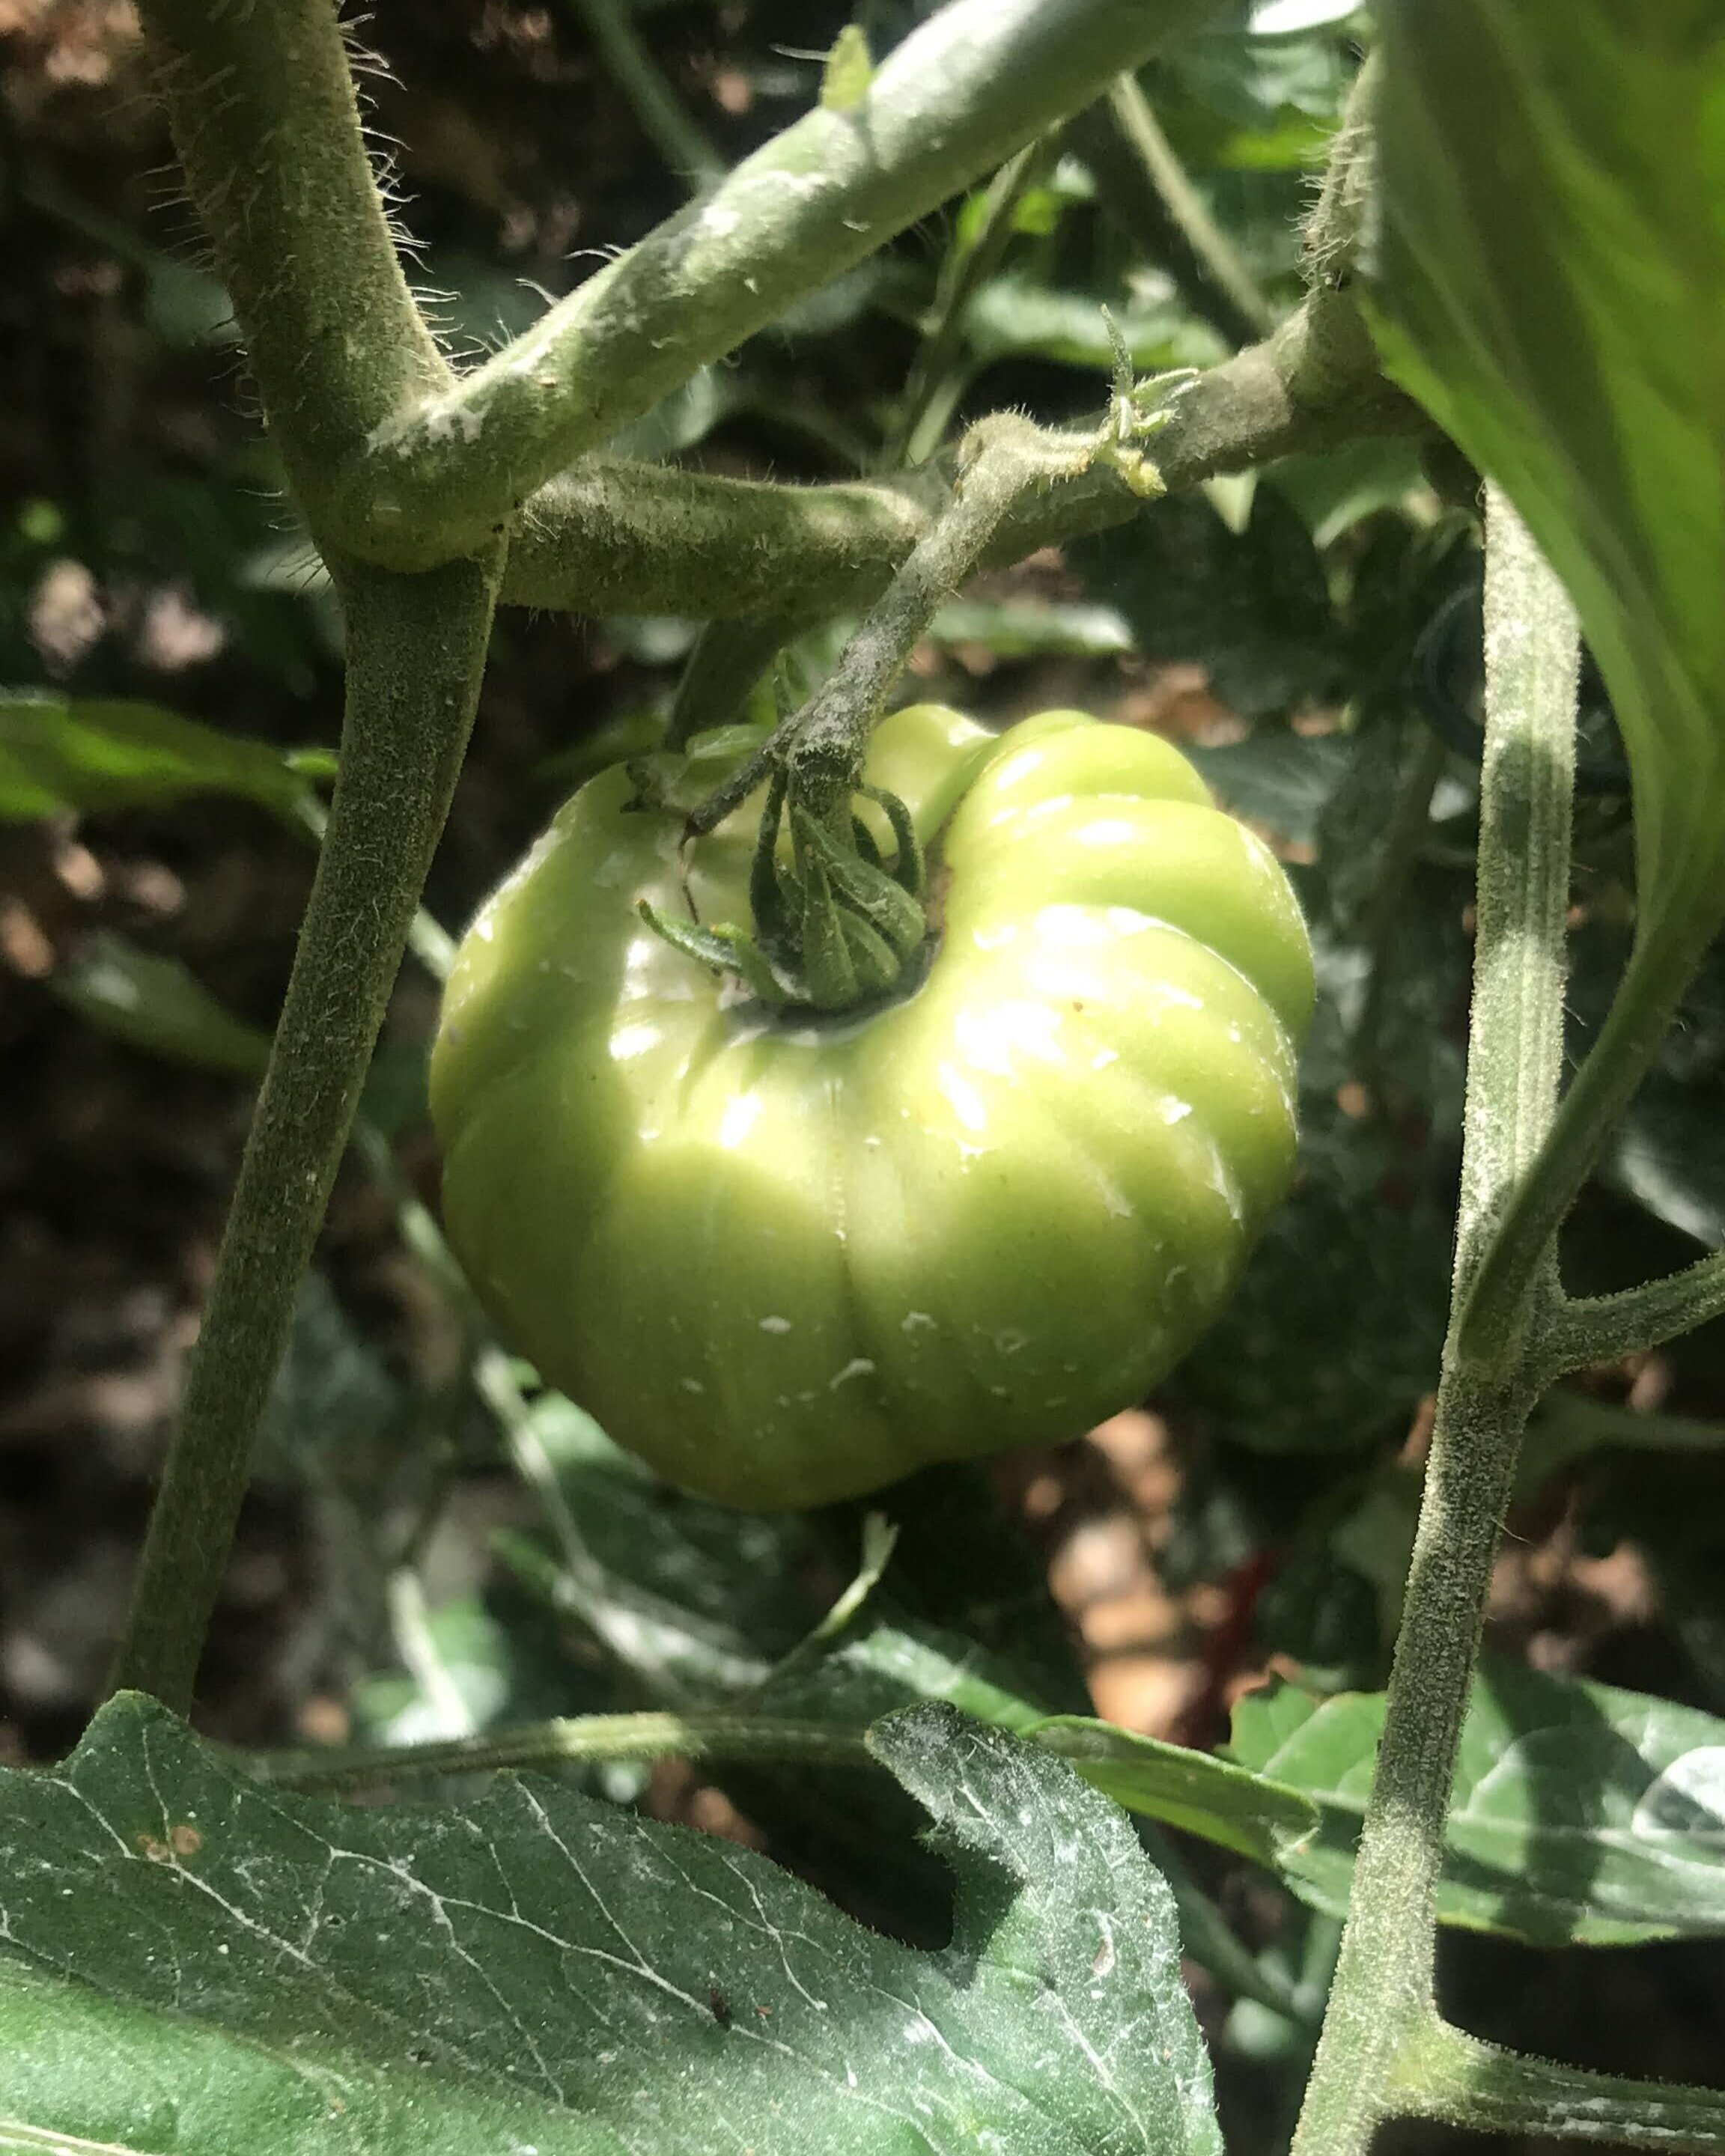 New Tomato from Vibrational Living Home Garden